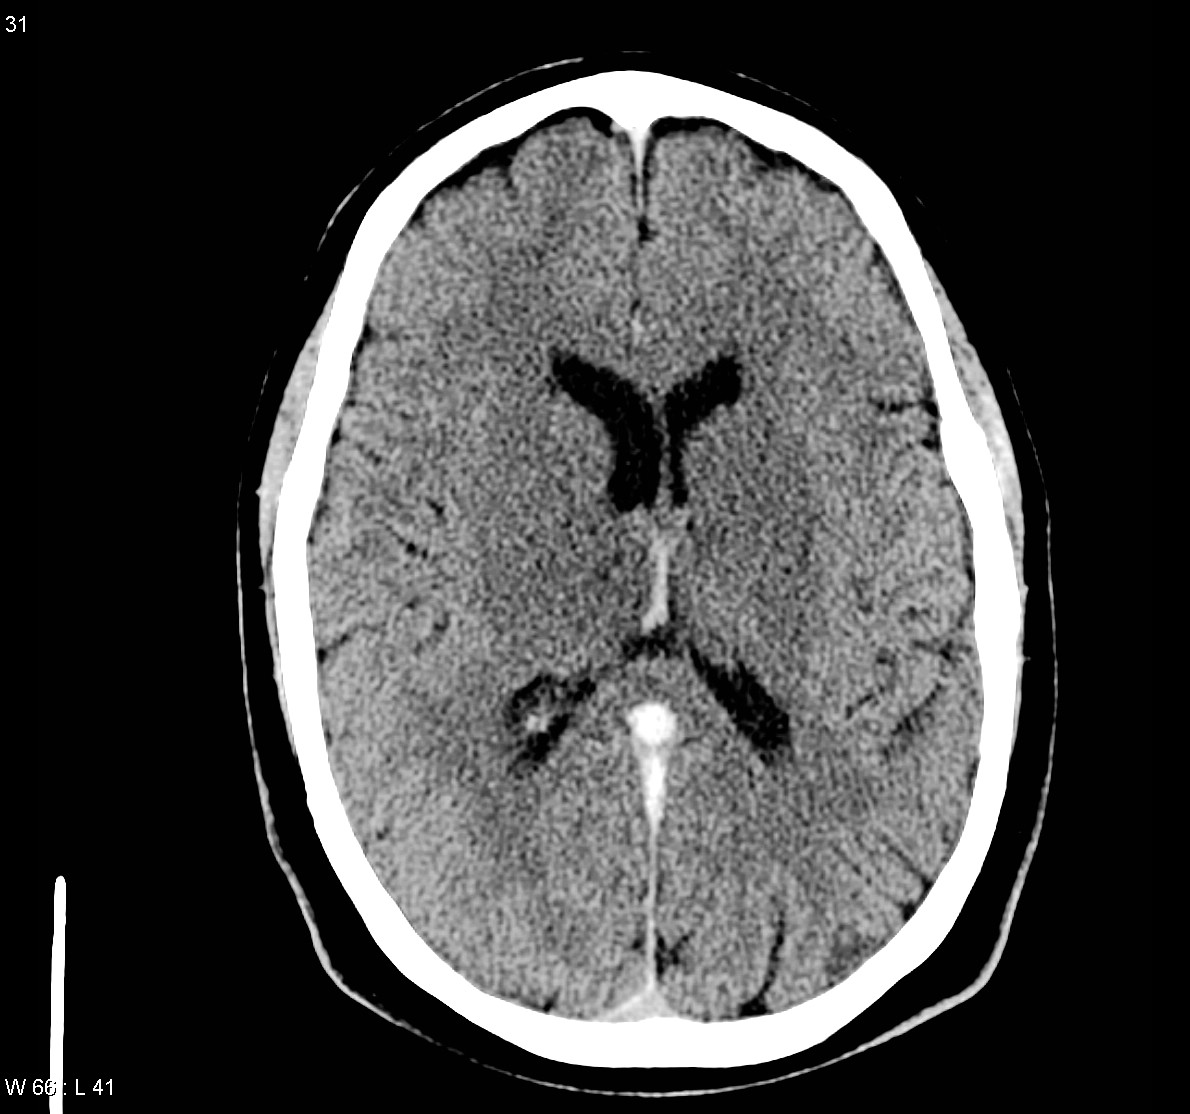 File:Internal-cerebral-vein-thrombosis-1.jpg